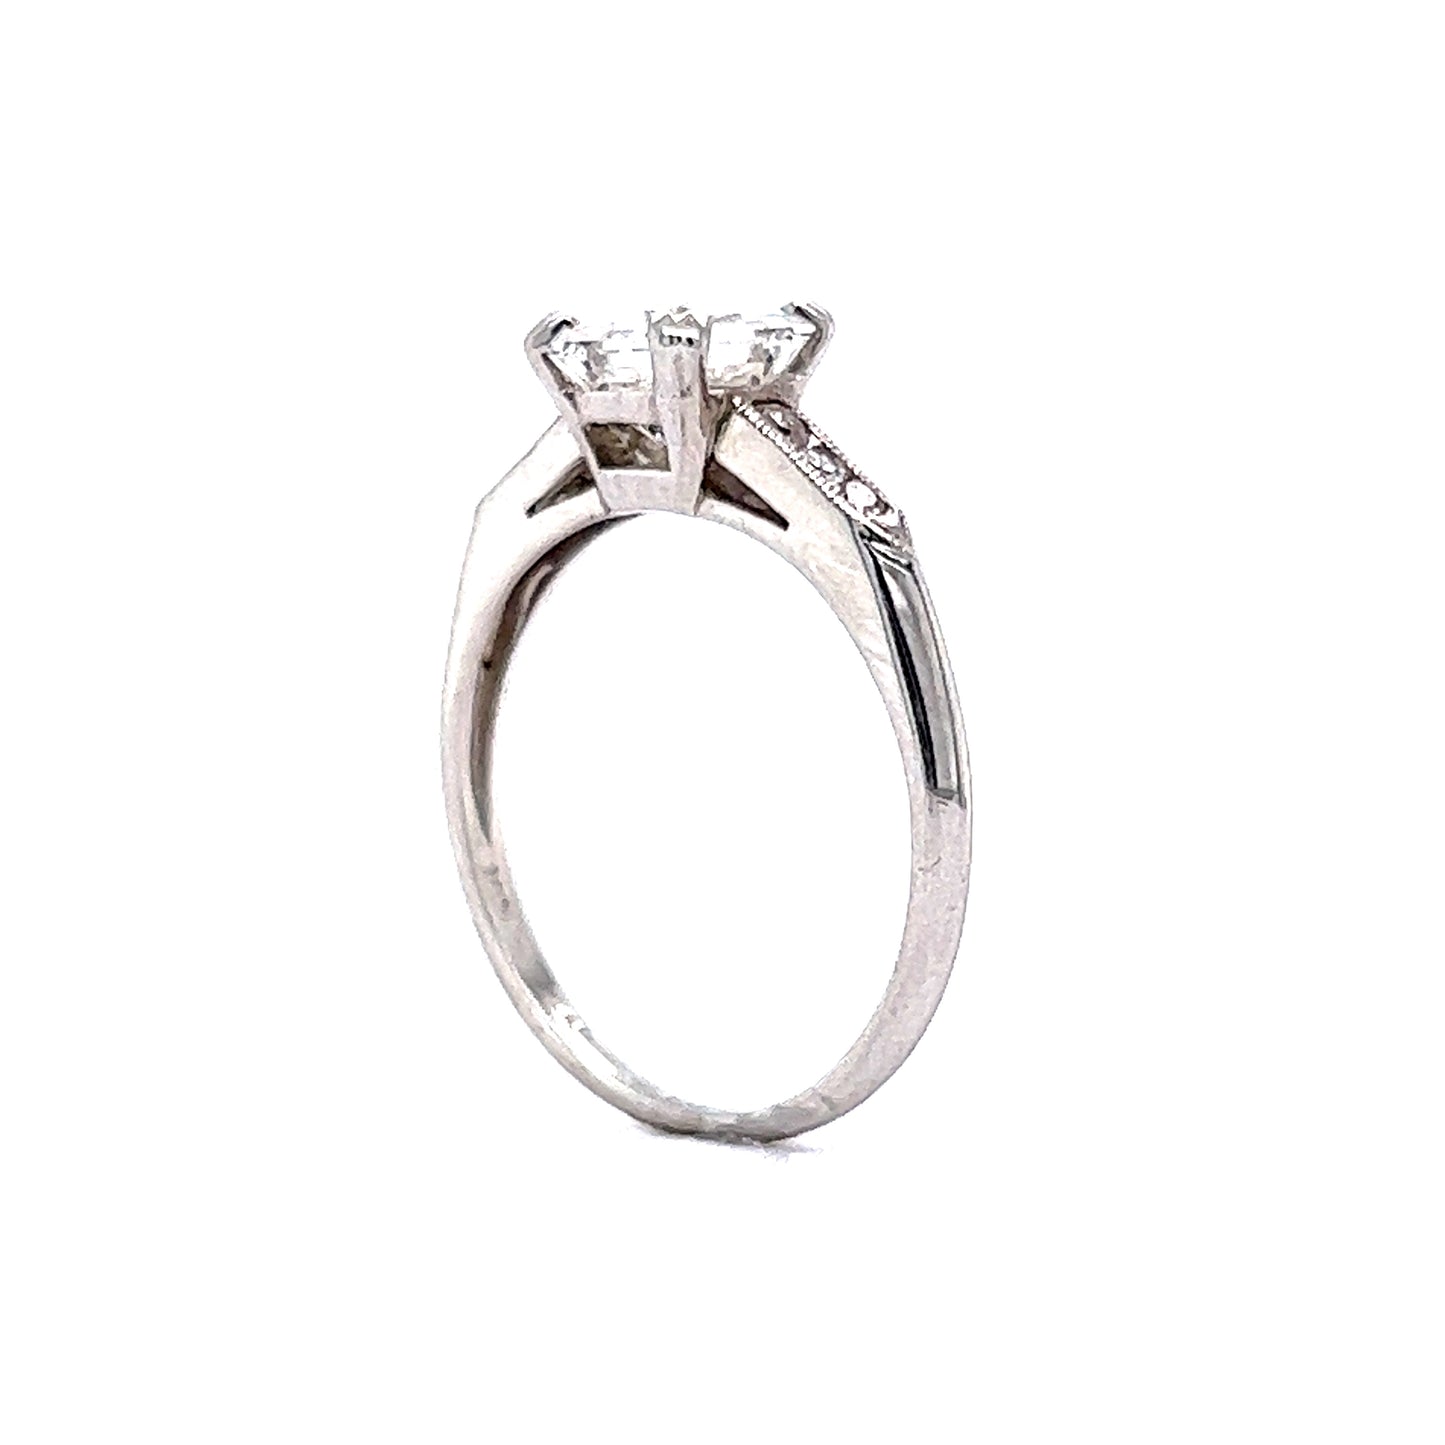 1.21 Princess Cut Diamond Engagement Ring in Platinum